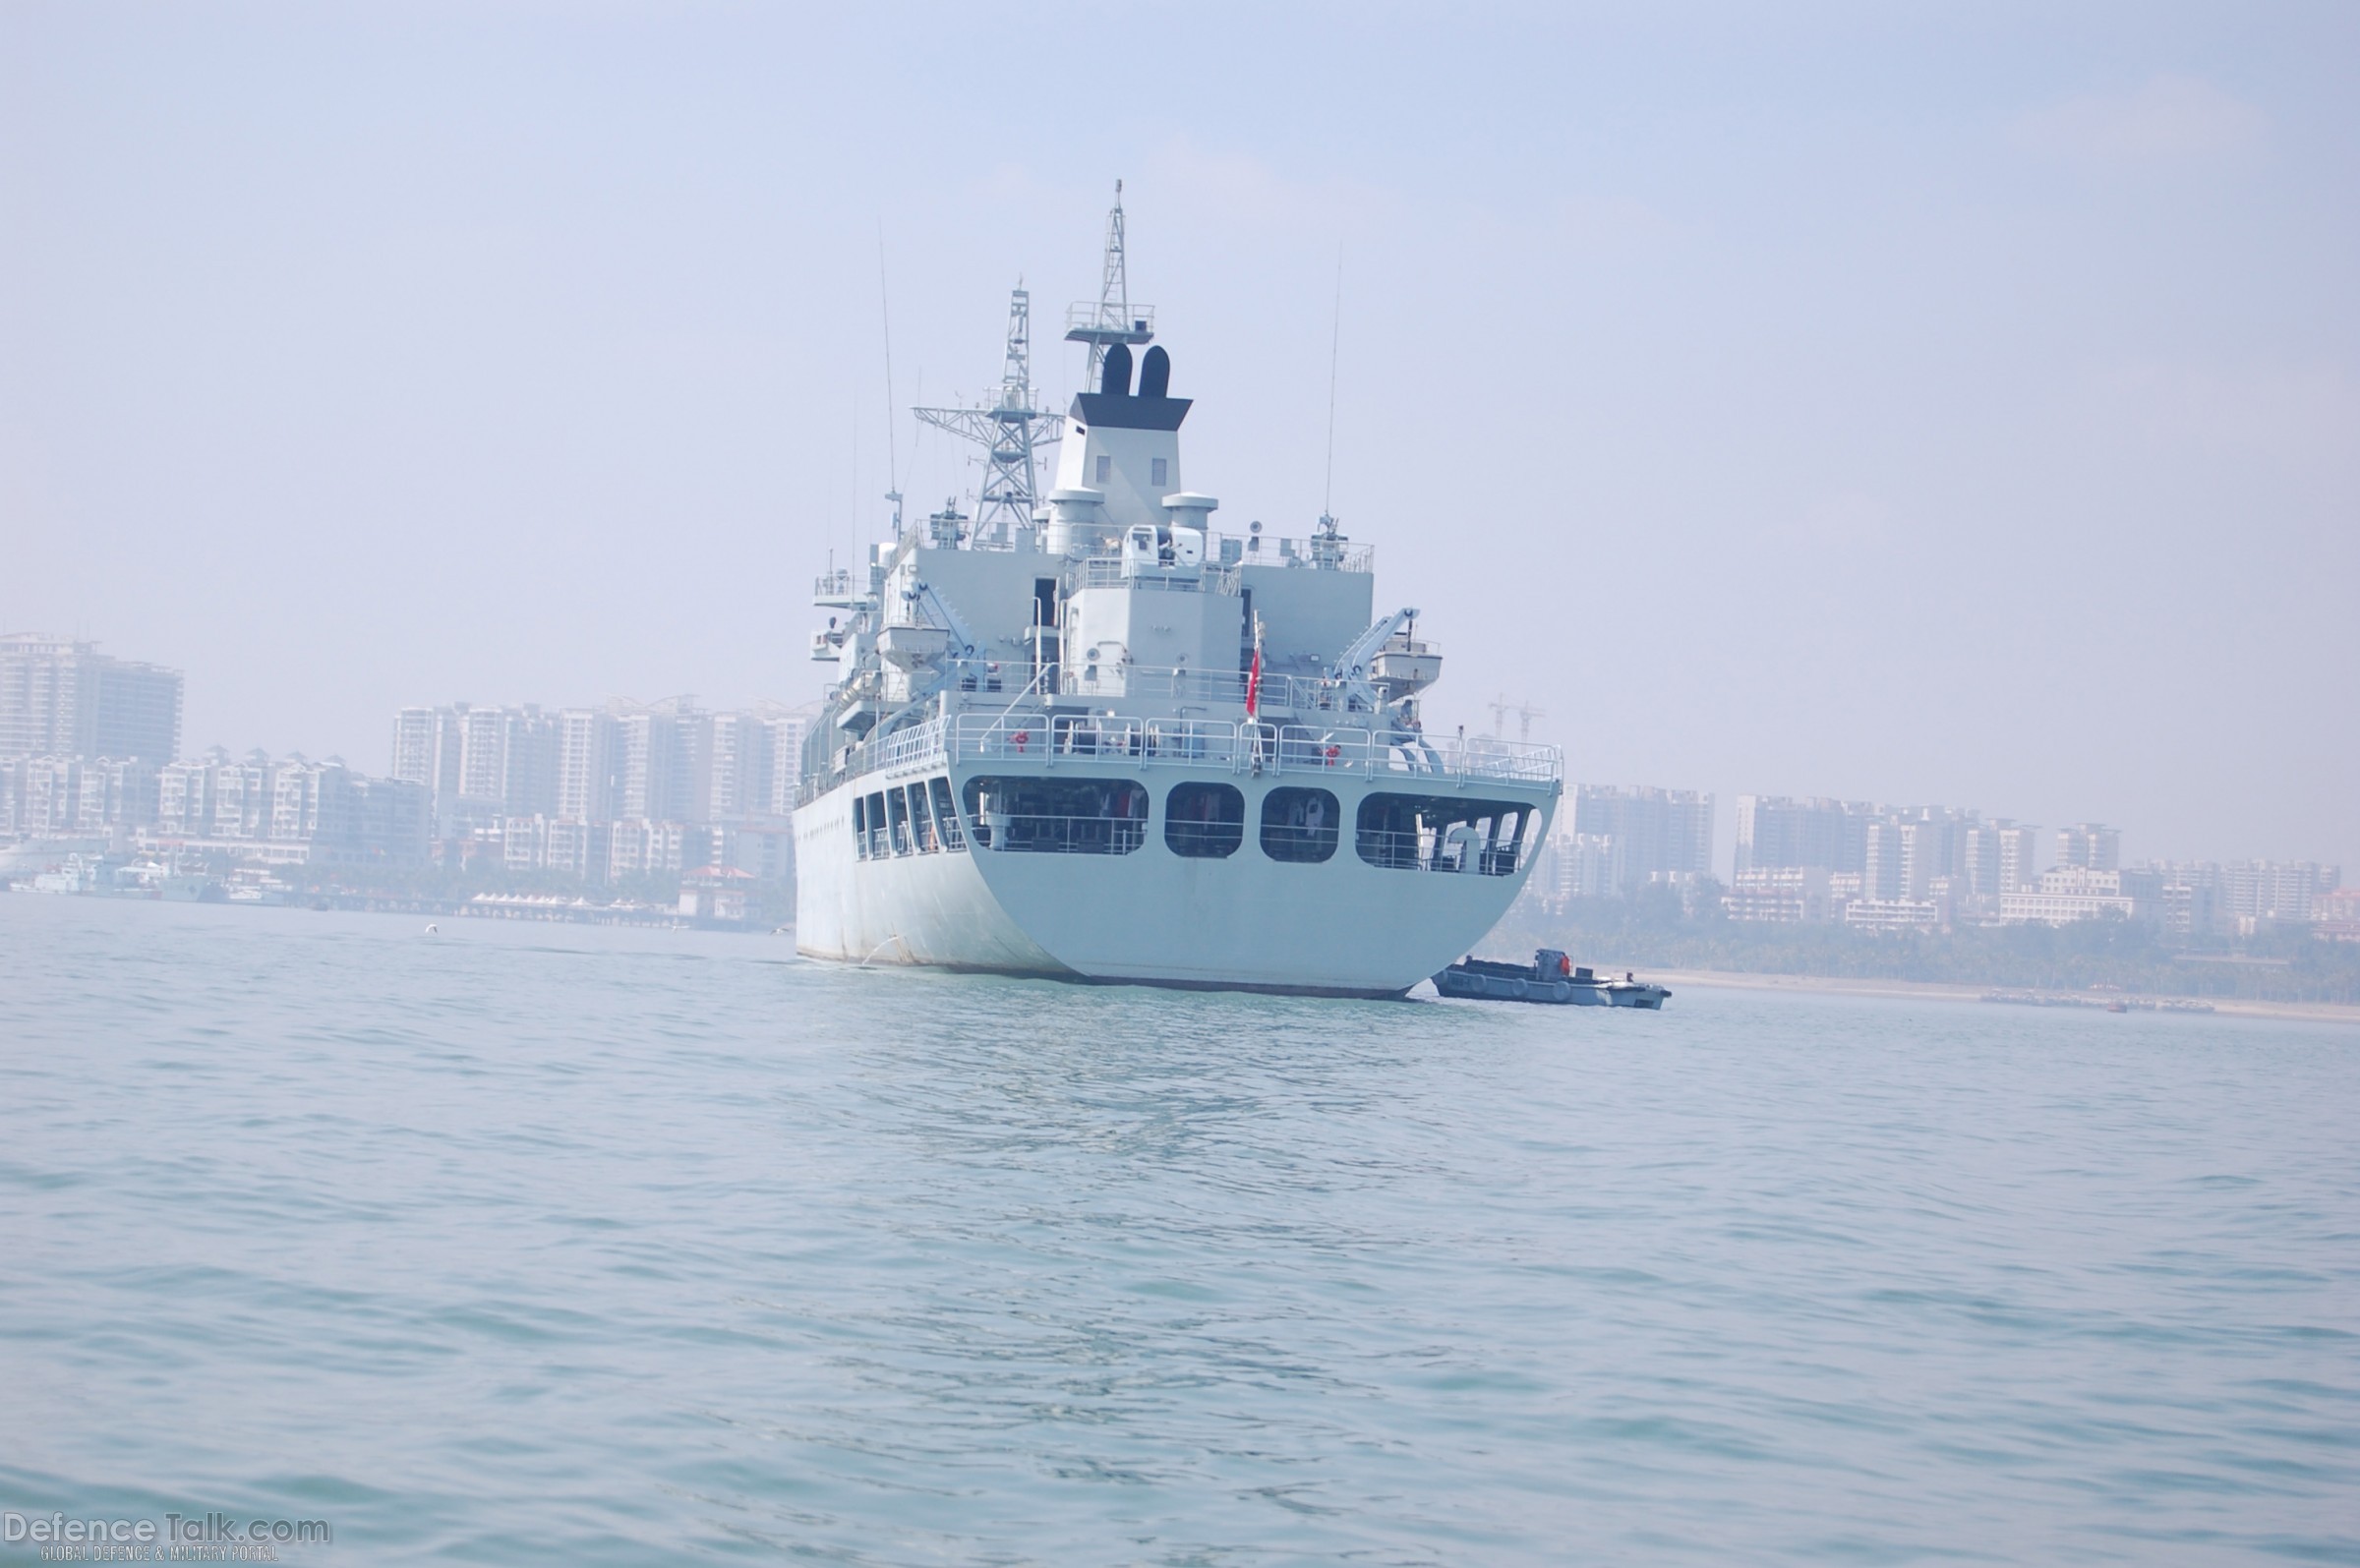 New replenishment ship 888 entering service - China Navy